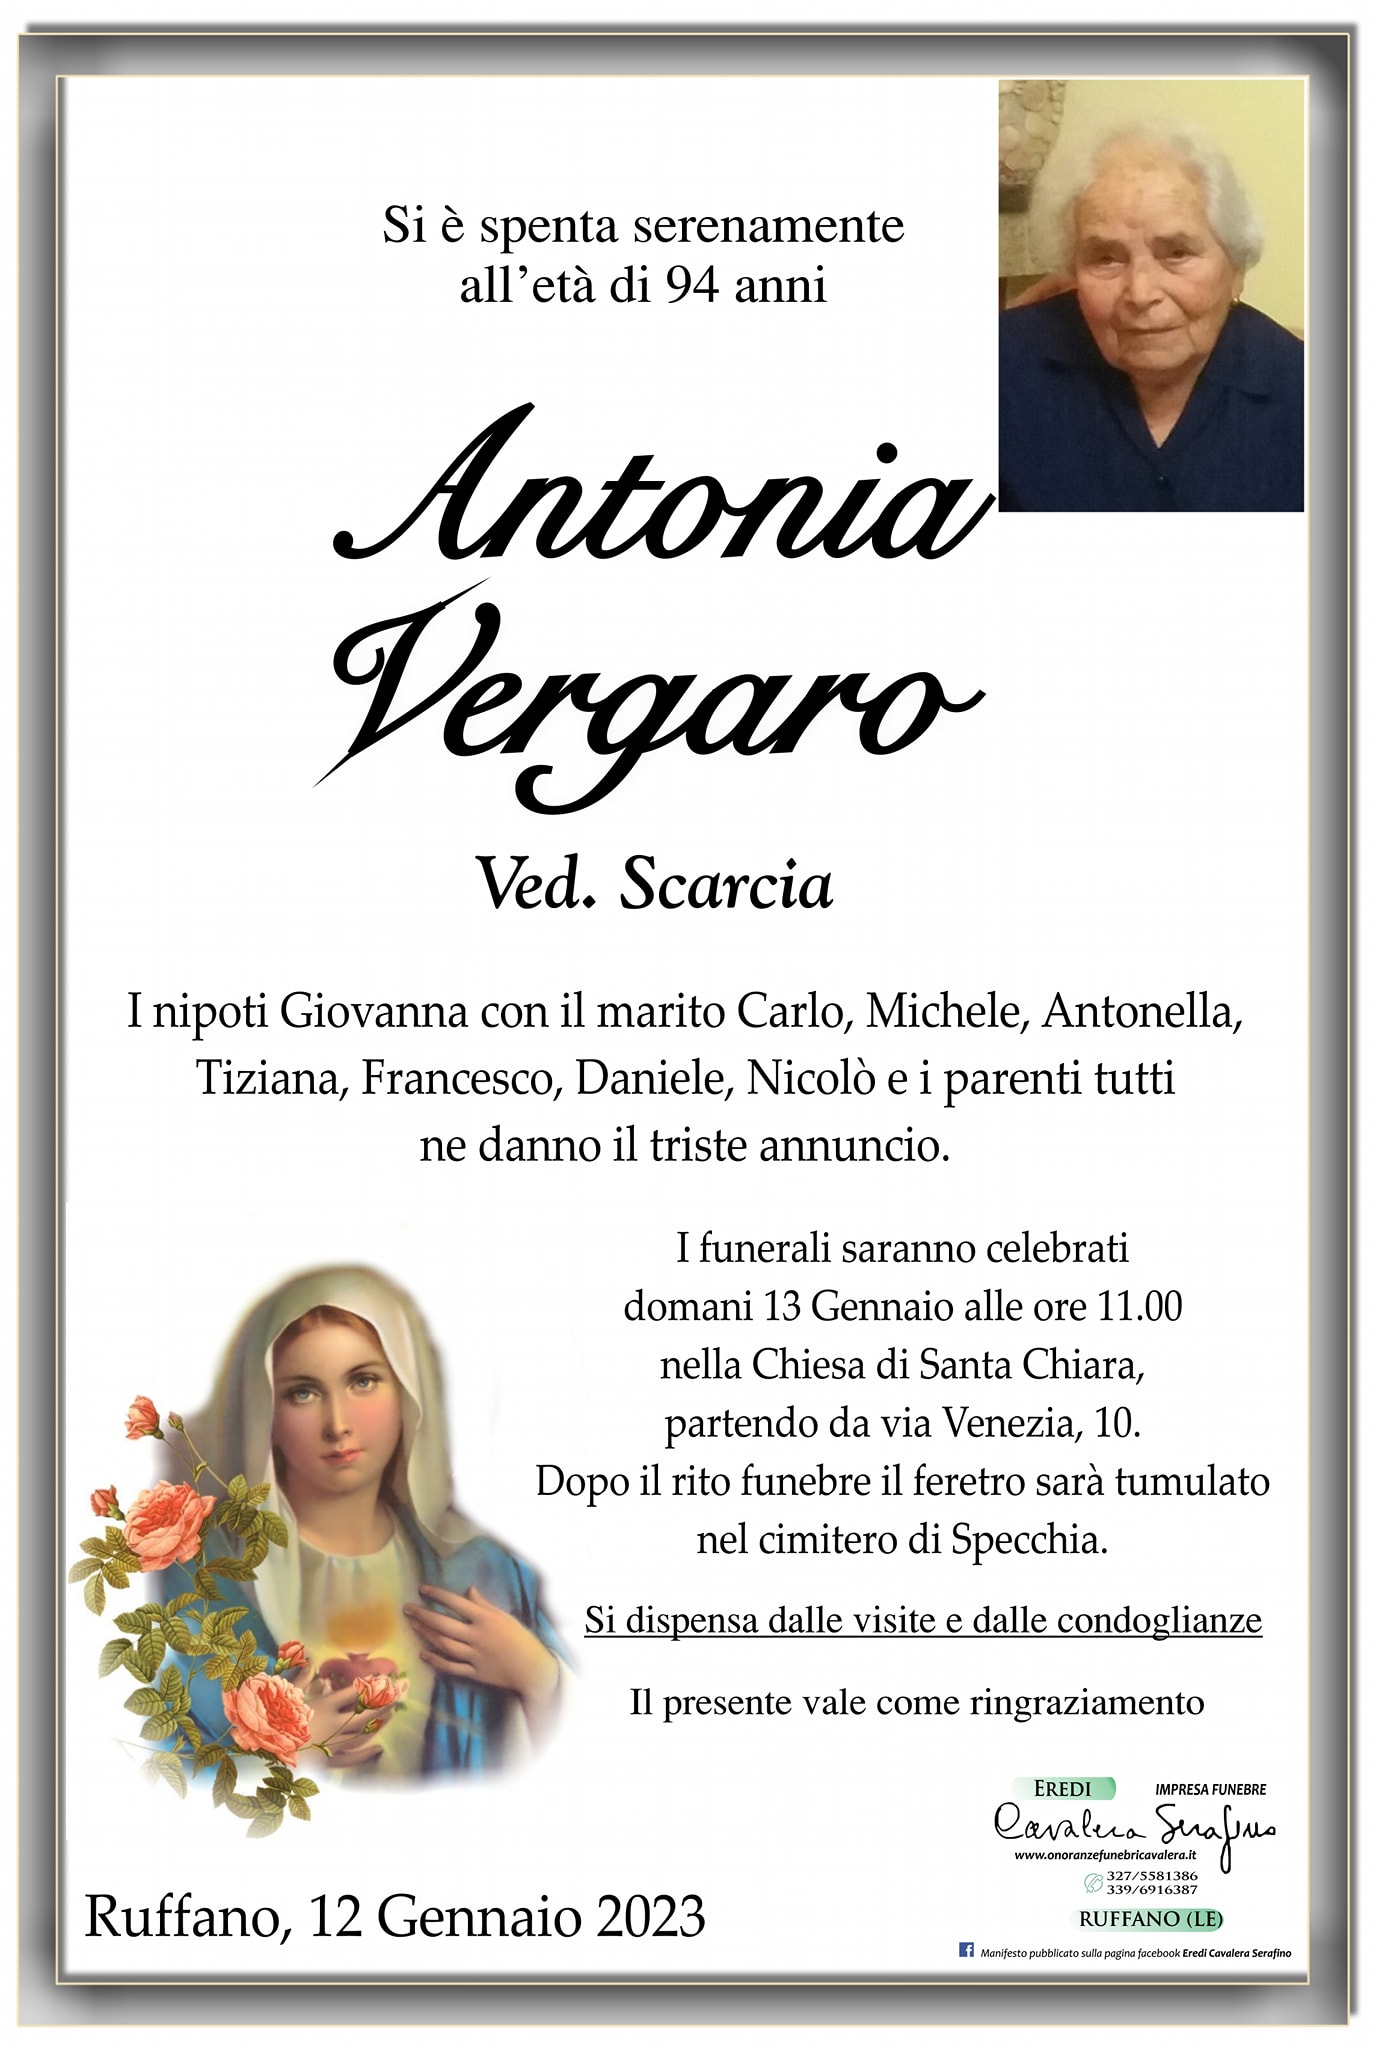 Antonia Vergaro